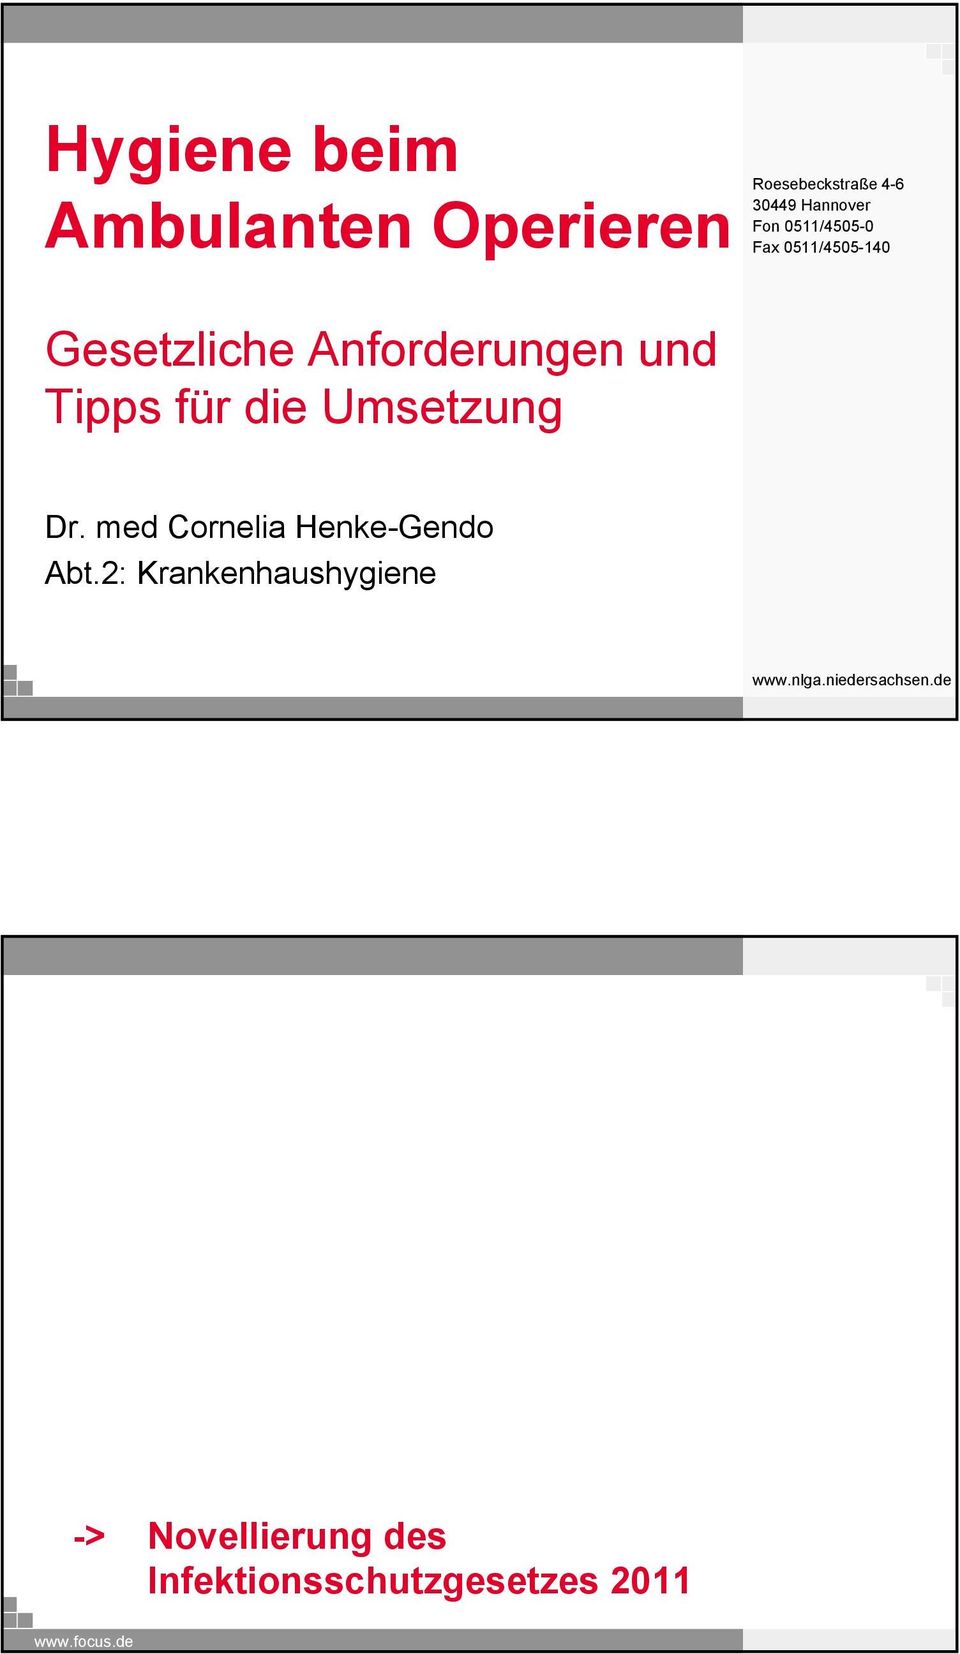 Umsetzung Dr. med Cornelia Henke-Gendo Abt.2: Krankenhaushygiene www.nlga.